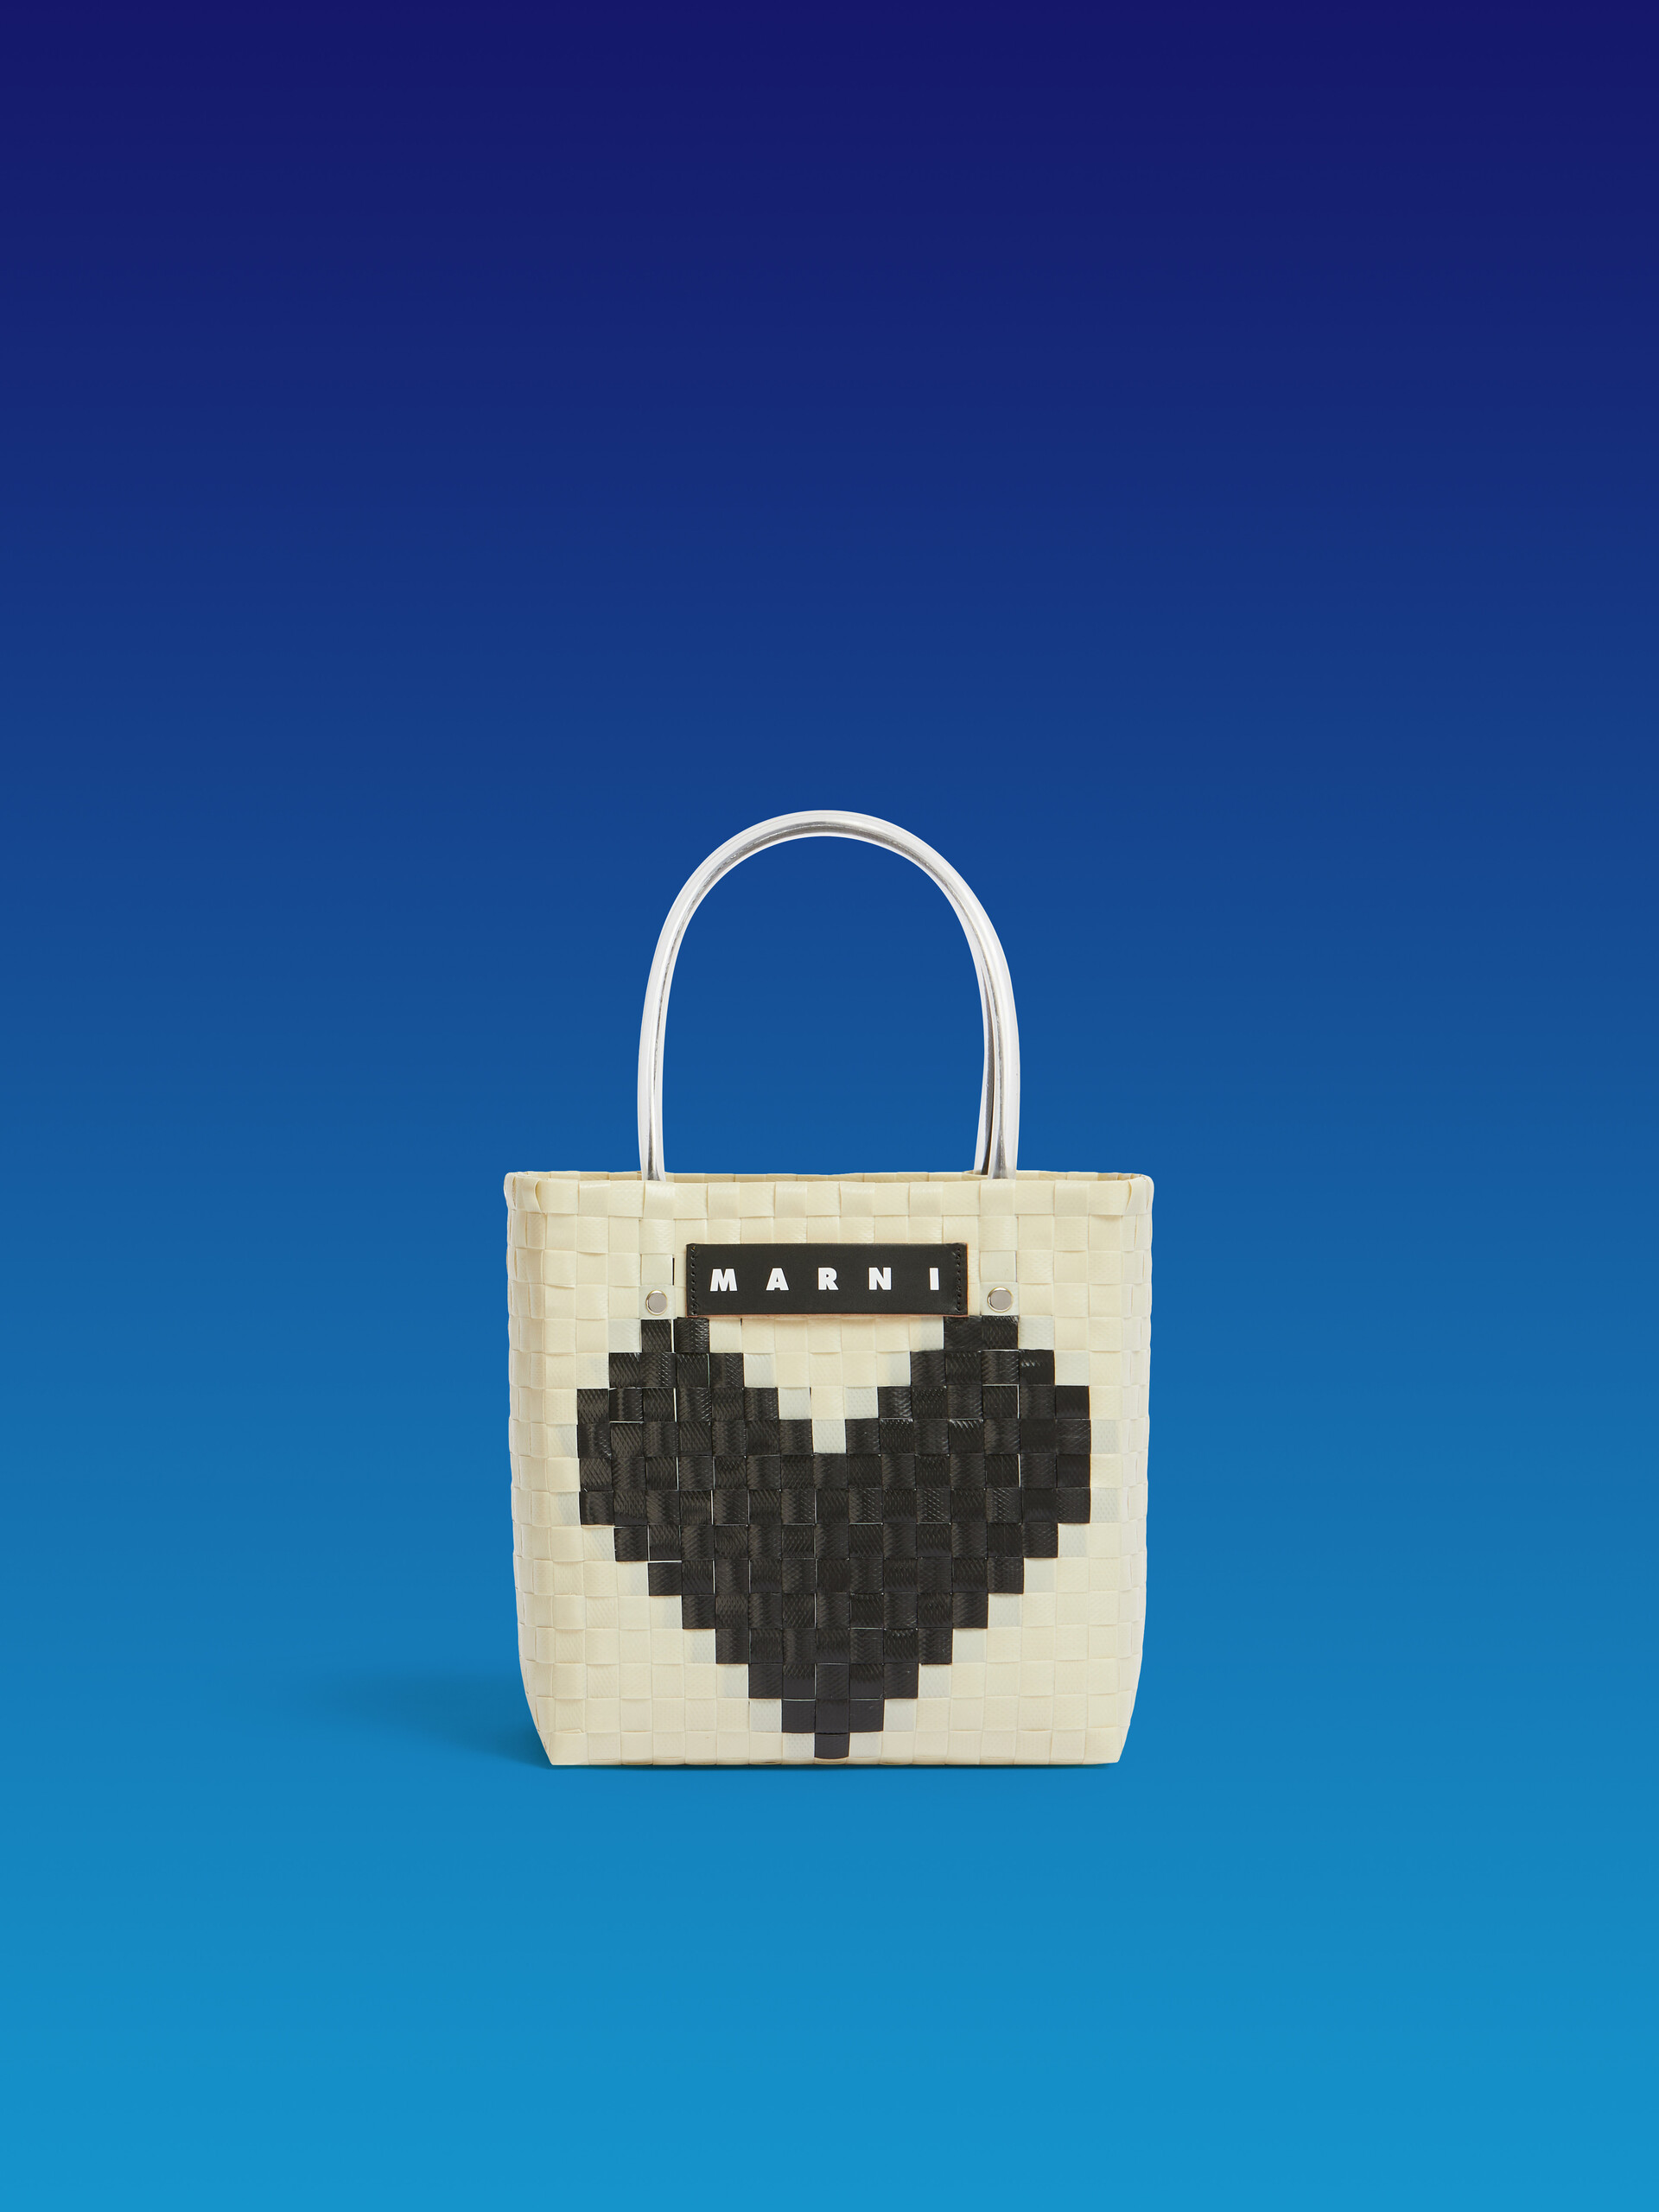 Marni Market Love Mini Basket Bag with black heart - Shopping Bags - Image 1